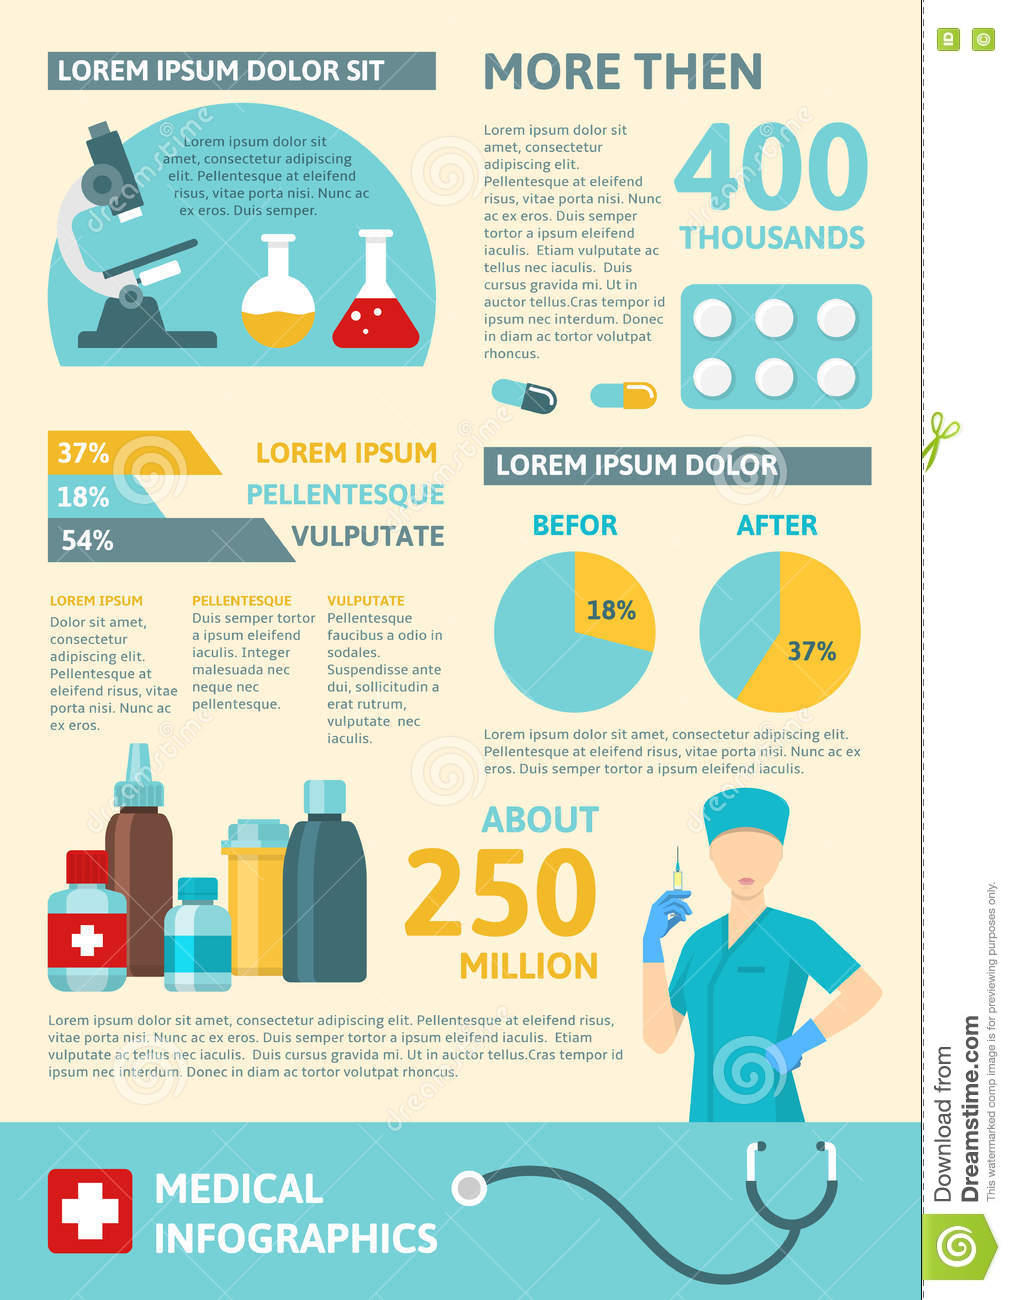 Trends in Alternative Medicine [Infographic] - Business 2 Community